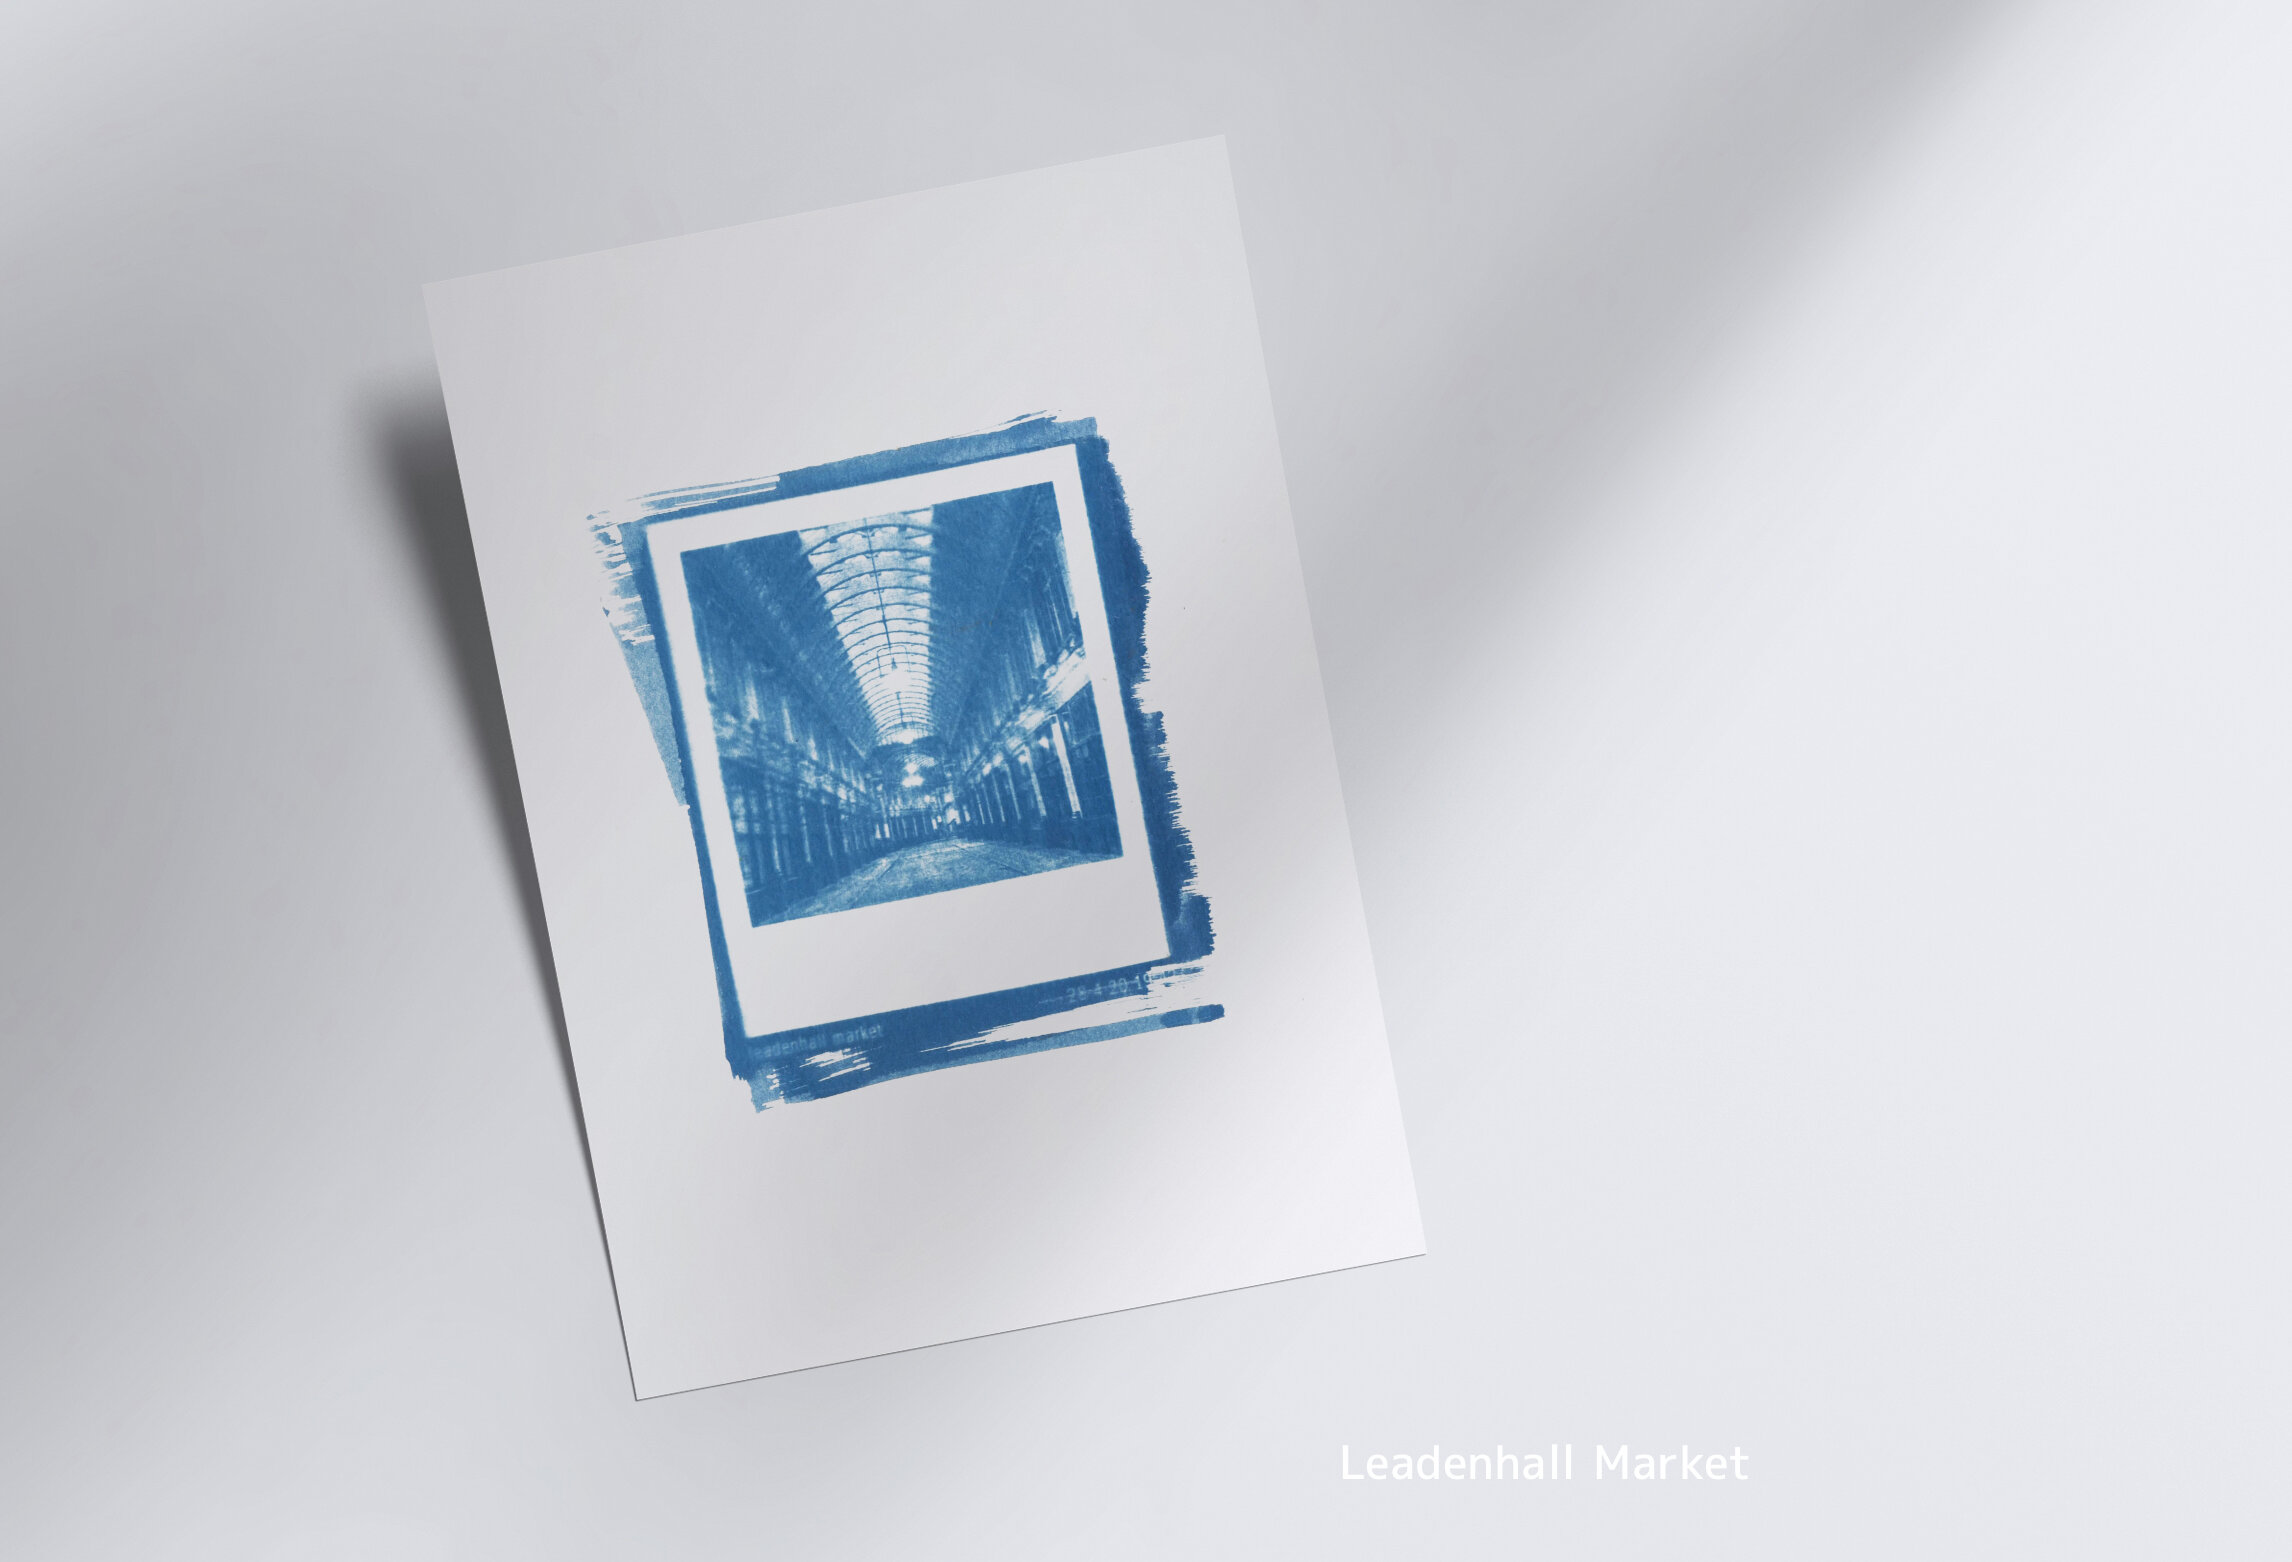 leadenhall market_2.jpg